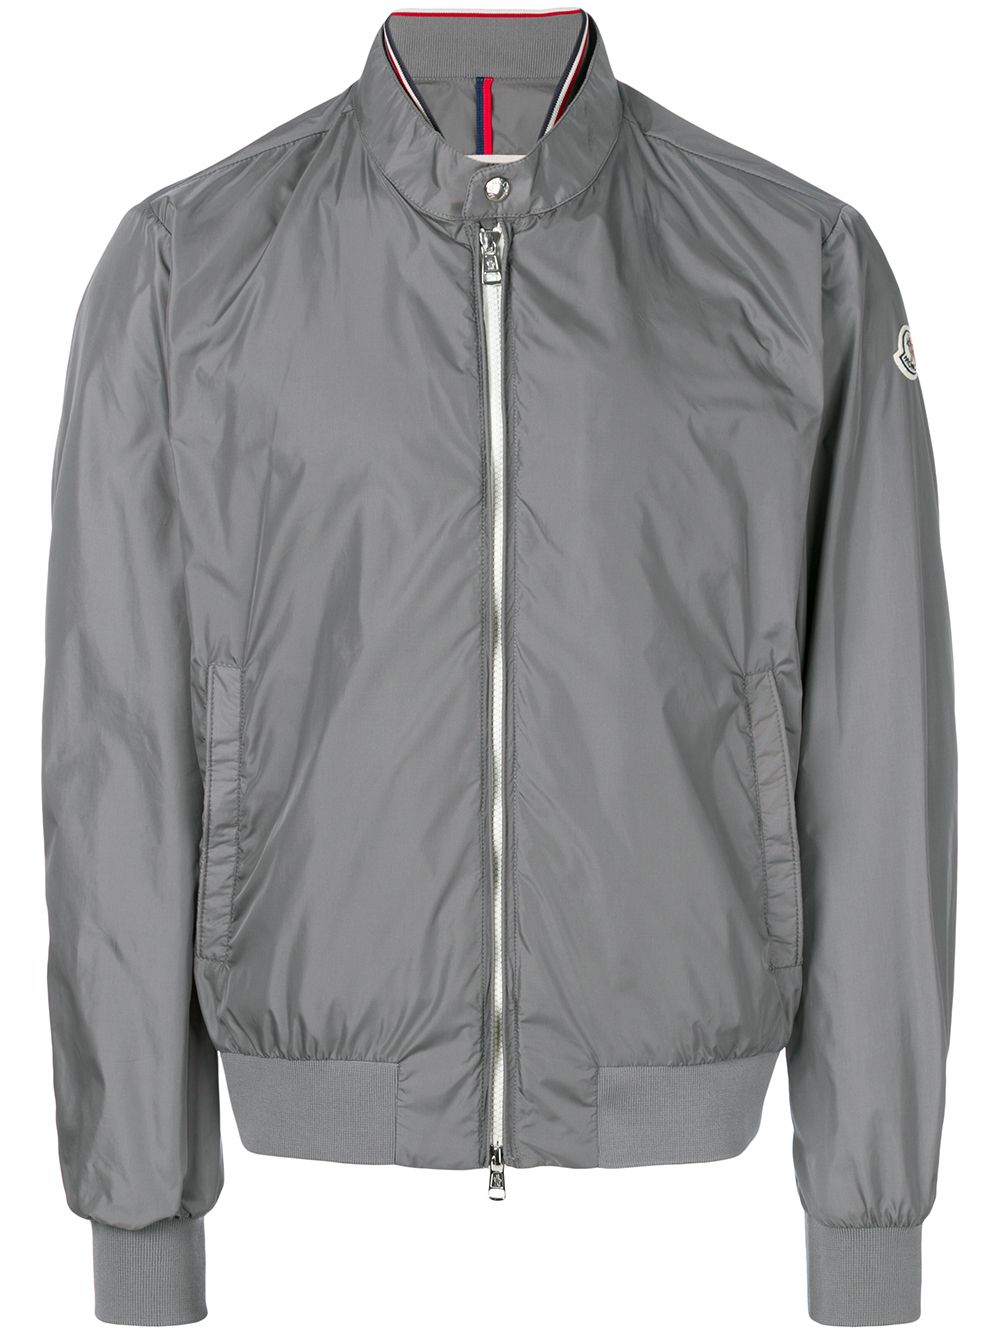 Moncler Miroir bomber jacket $595 - Buy 